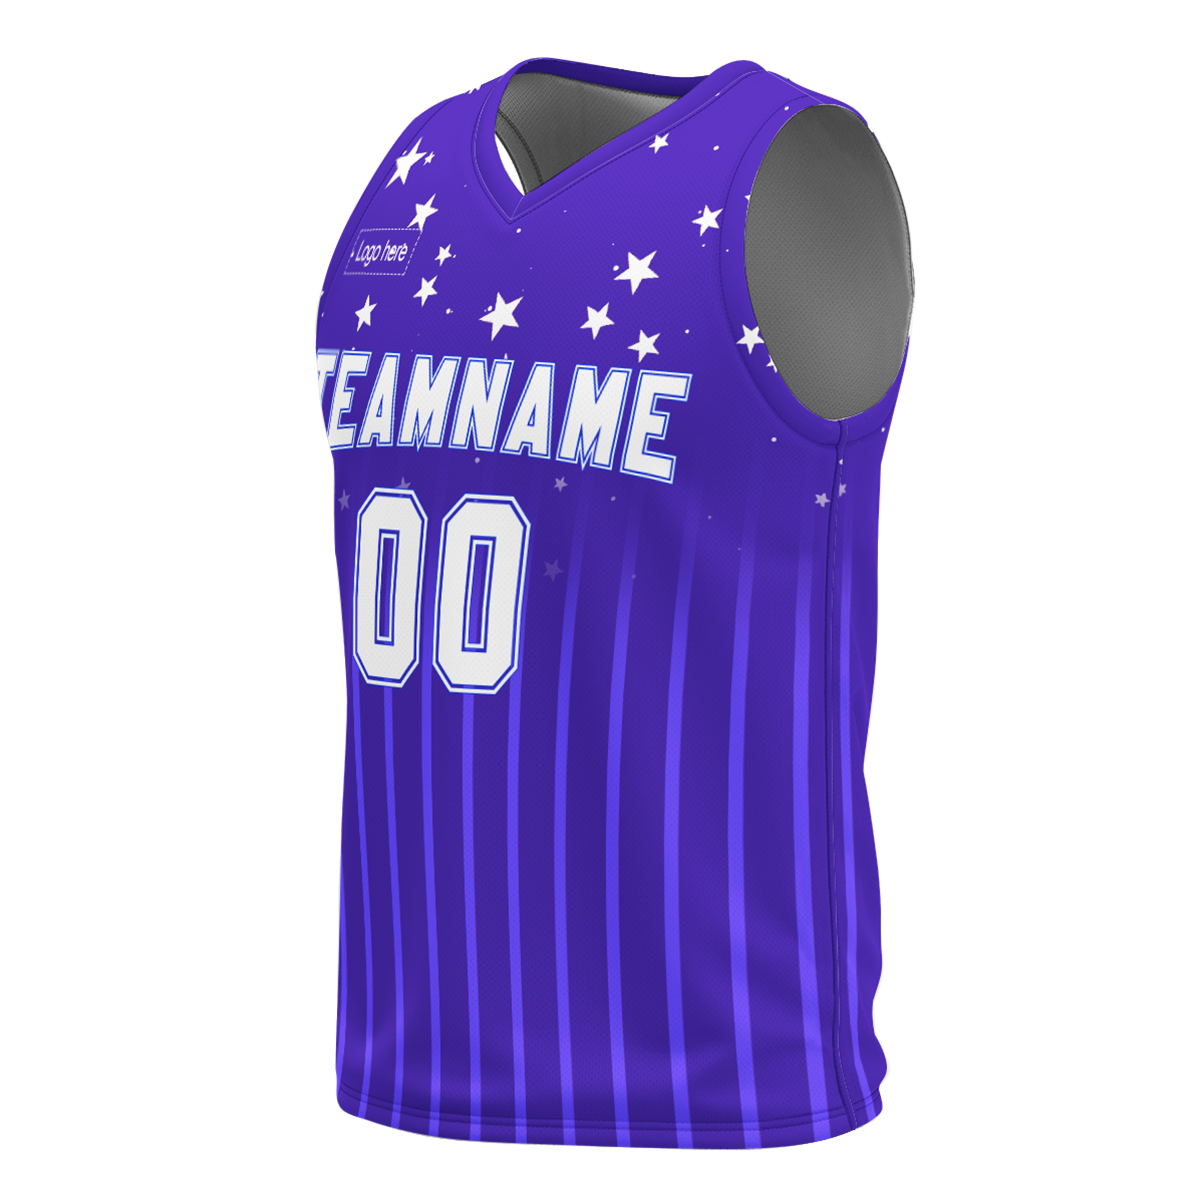 oem-printing-men-basketball-uniforms-custom-adult-mesh-durable-basketball-jerseys-at-cj-pod-5